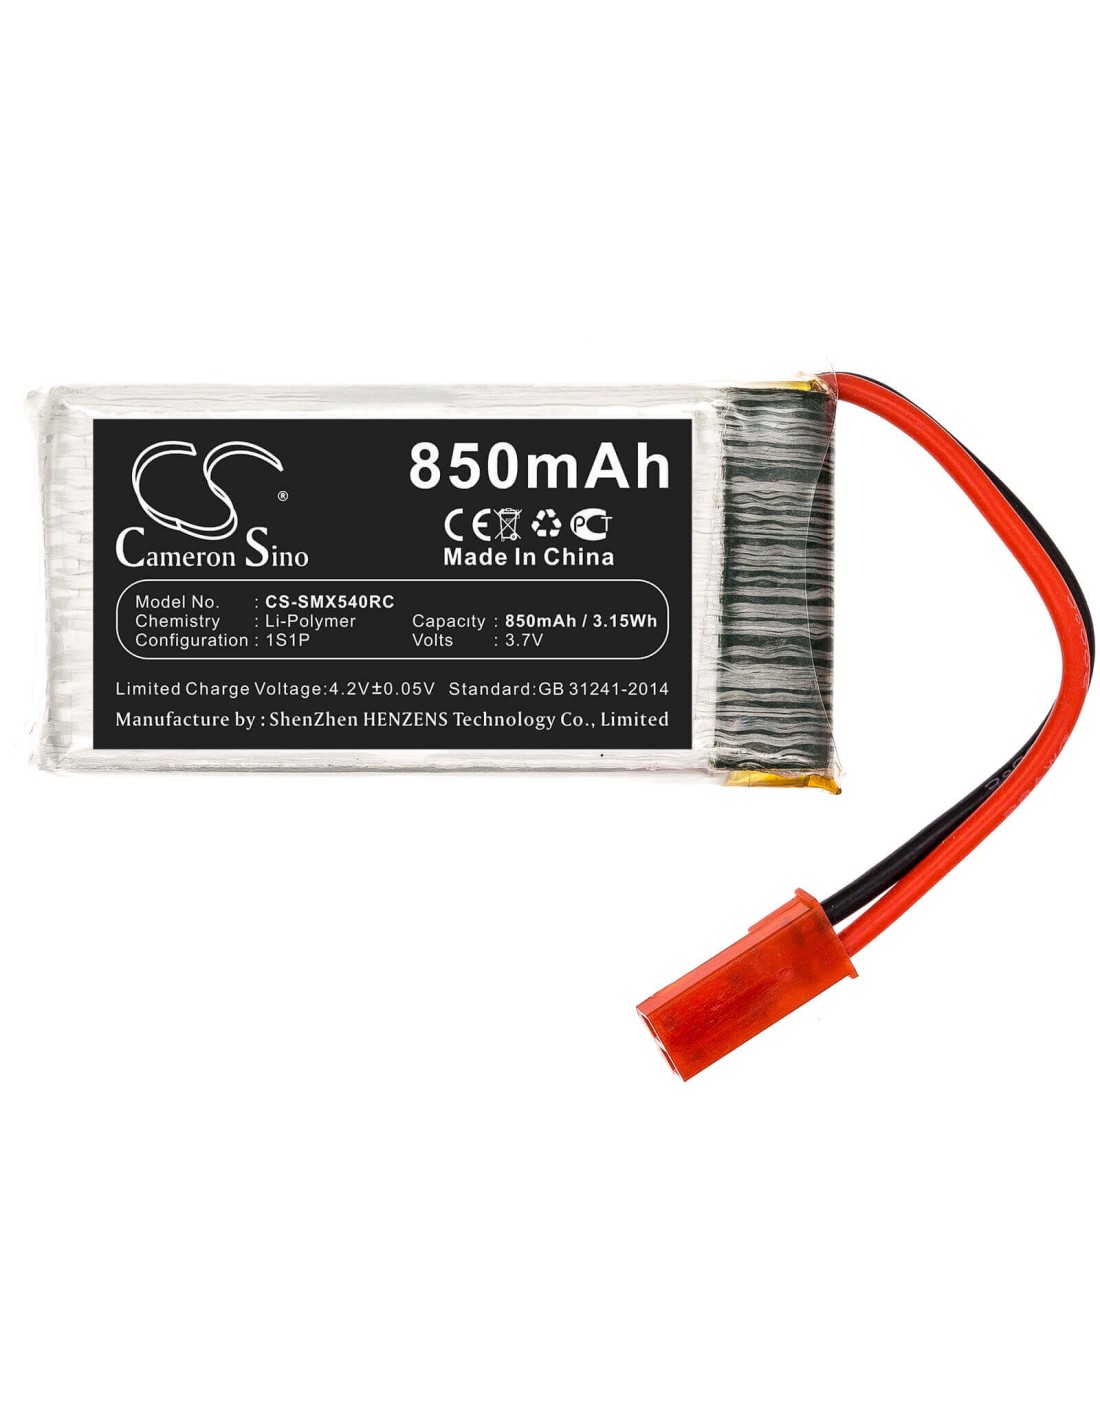 Battery for Syma, X54hc, X54hw 3.7V, 850mAh - 3.15Wh